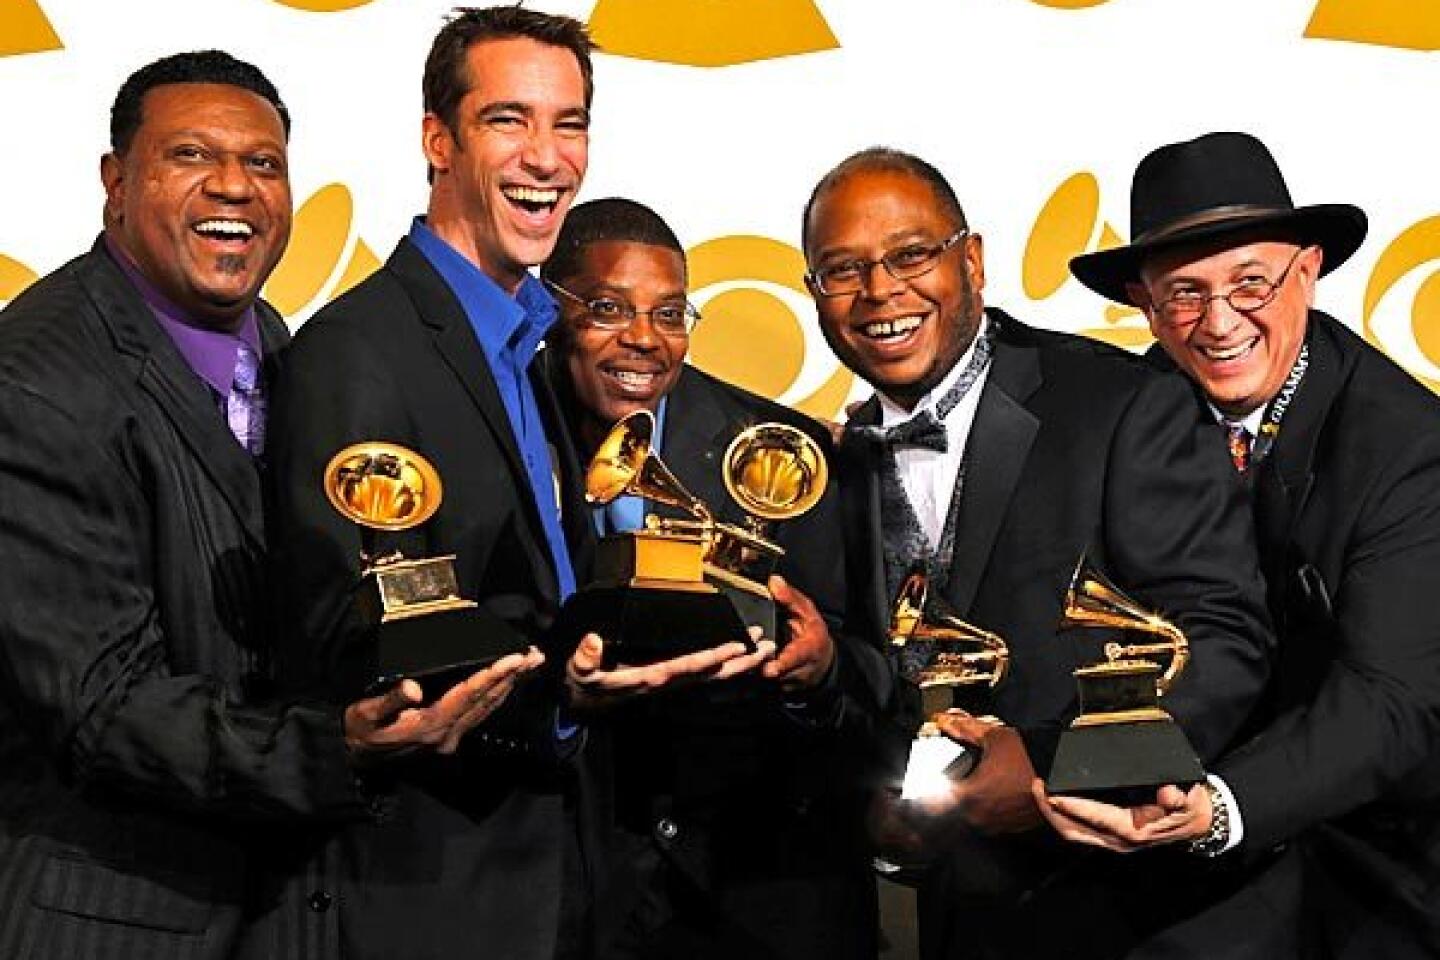 53 Annual Grammy Awards Sunday, February 13, 2011 8pm ET paperback #1562